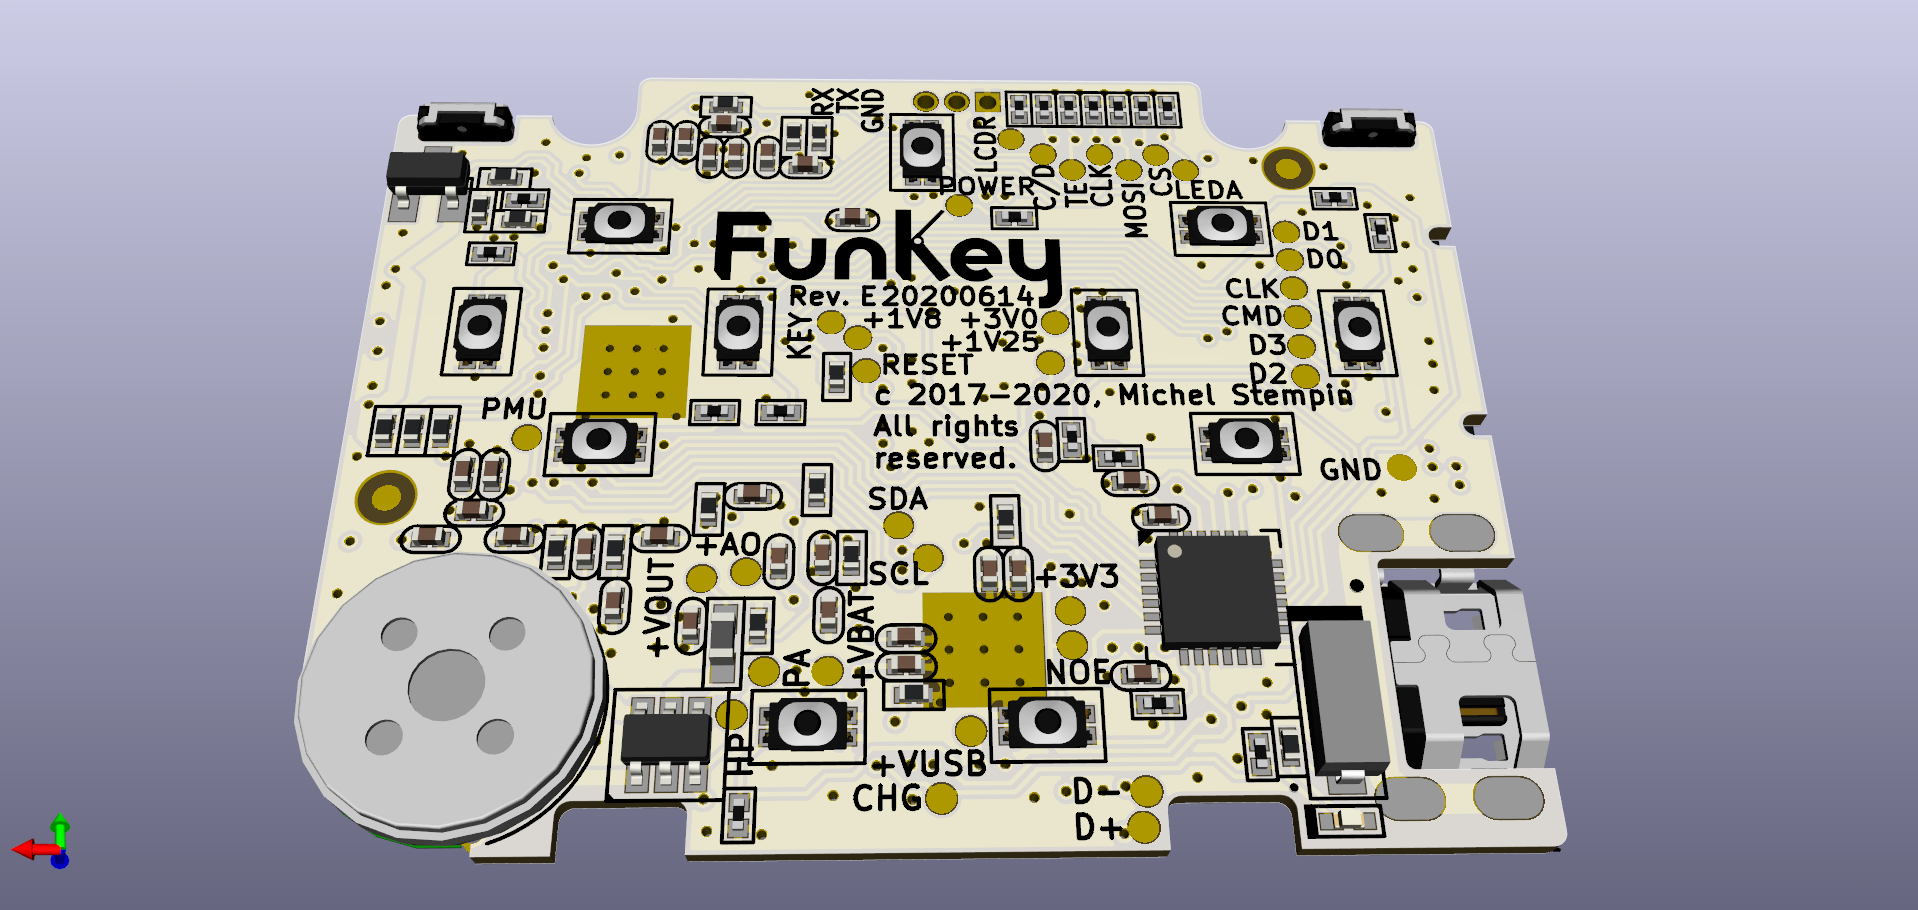 Install the GBA/PS1 BIOS - FunKey Project Documentation